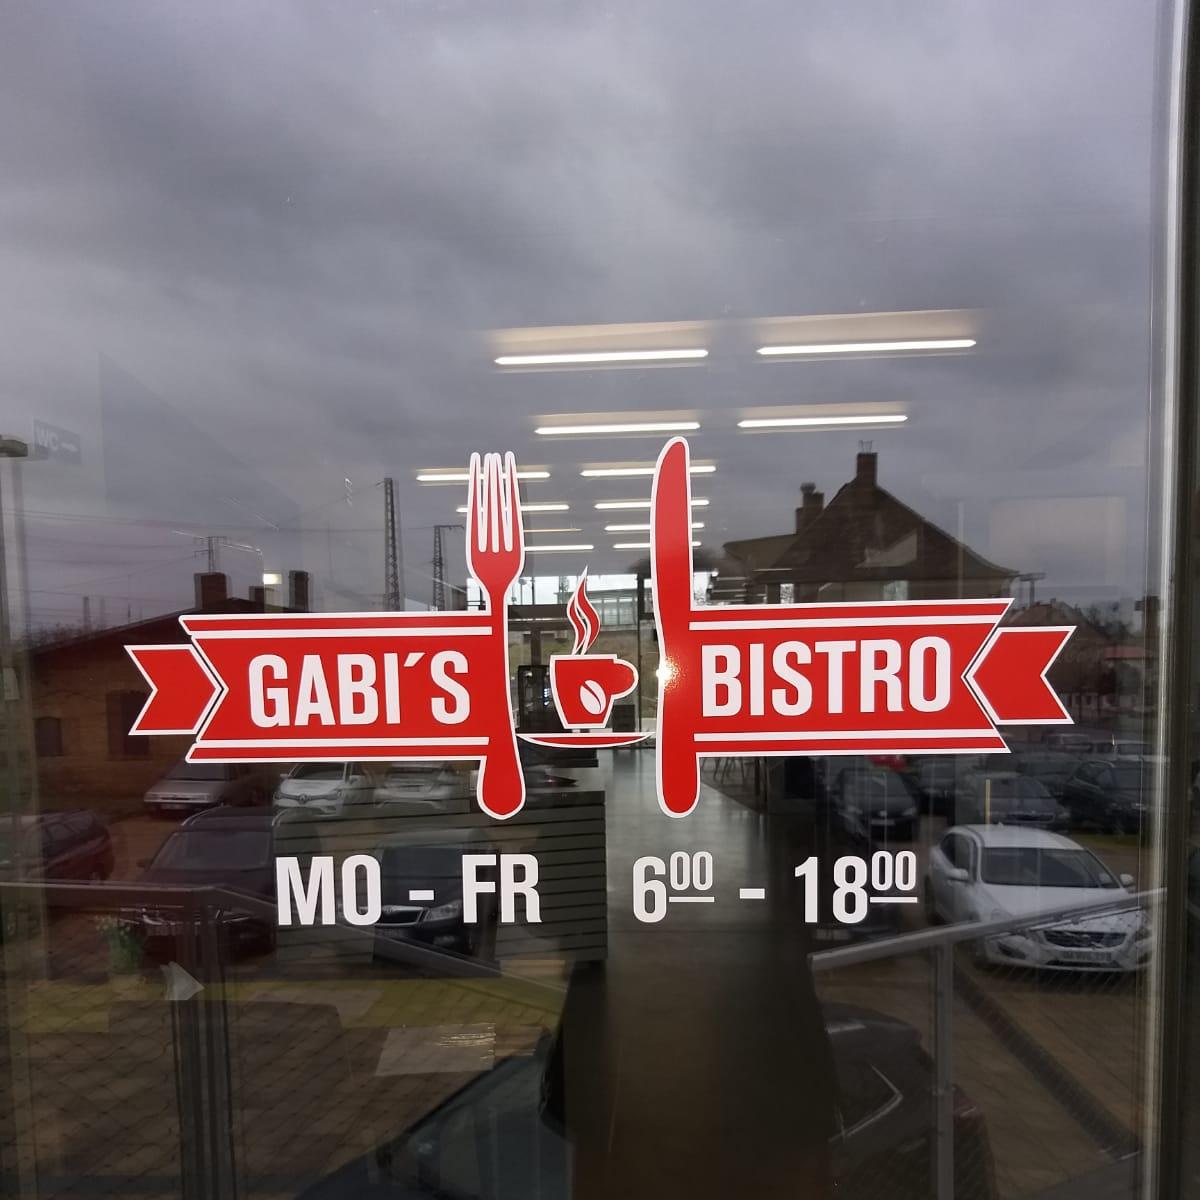 Restaurant "Gabi